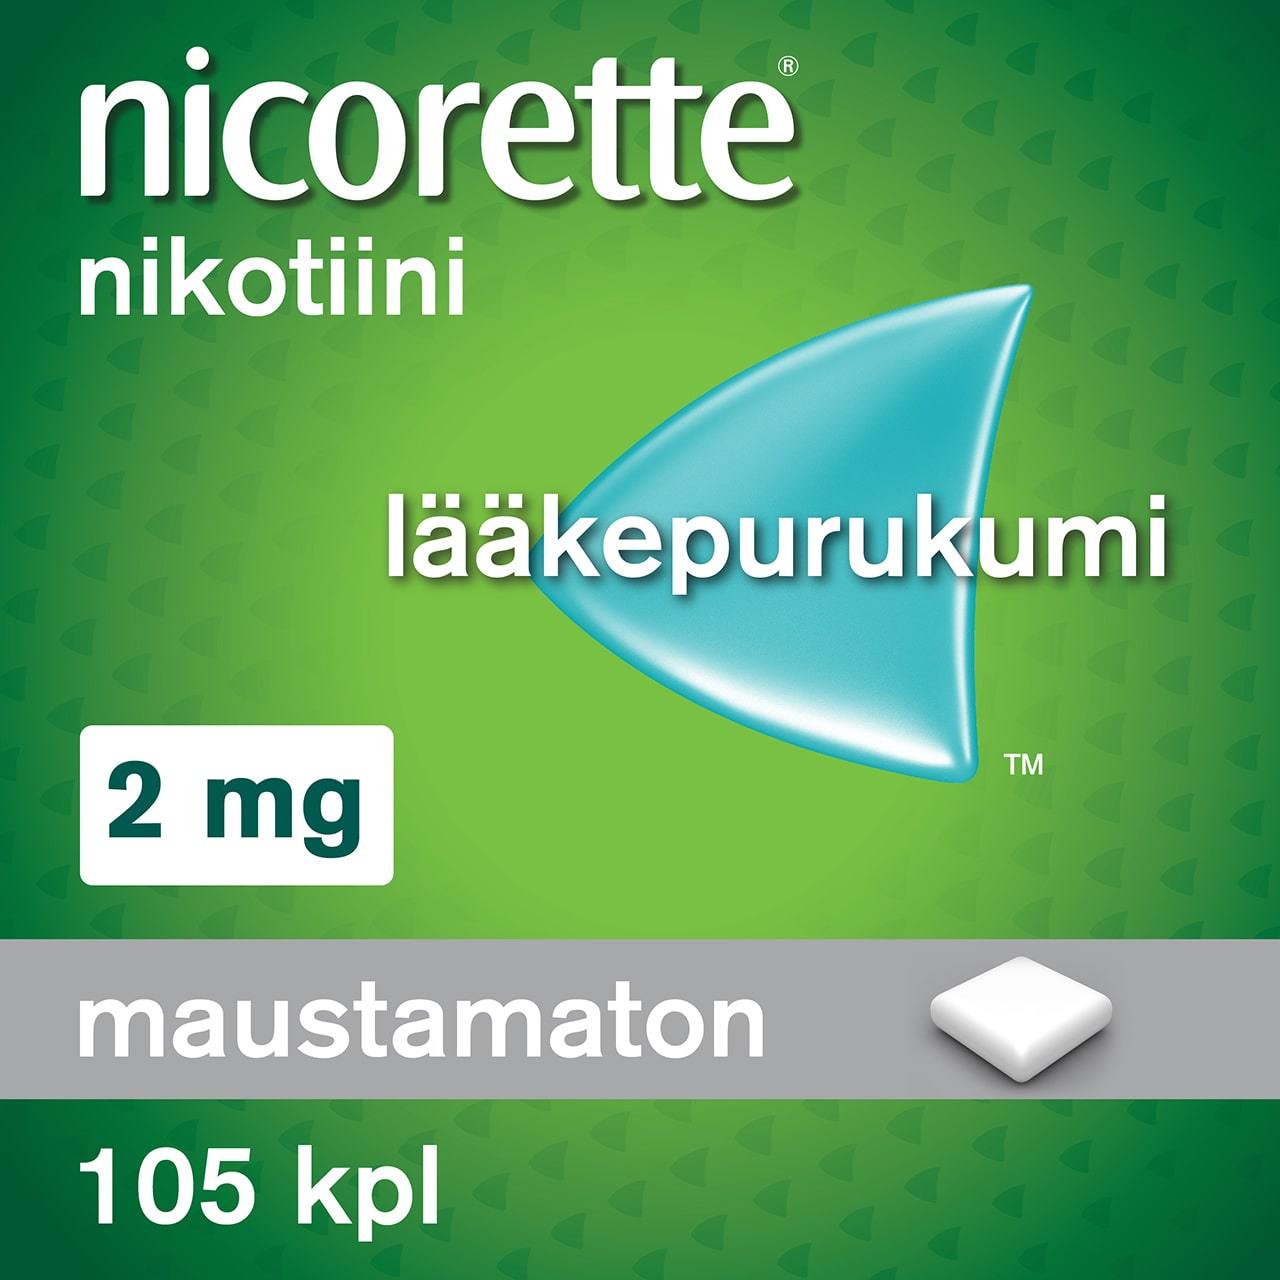 nicorette-nikotiini-purukumi-2mg-maustamaton-105-kpl-tupakanhimoon